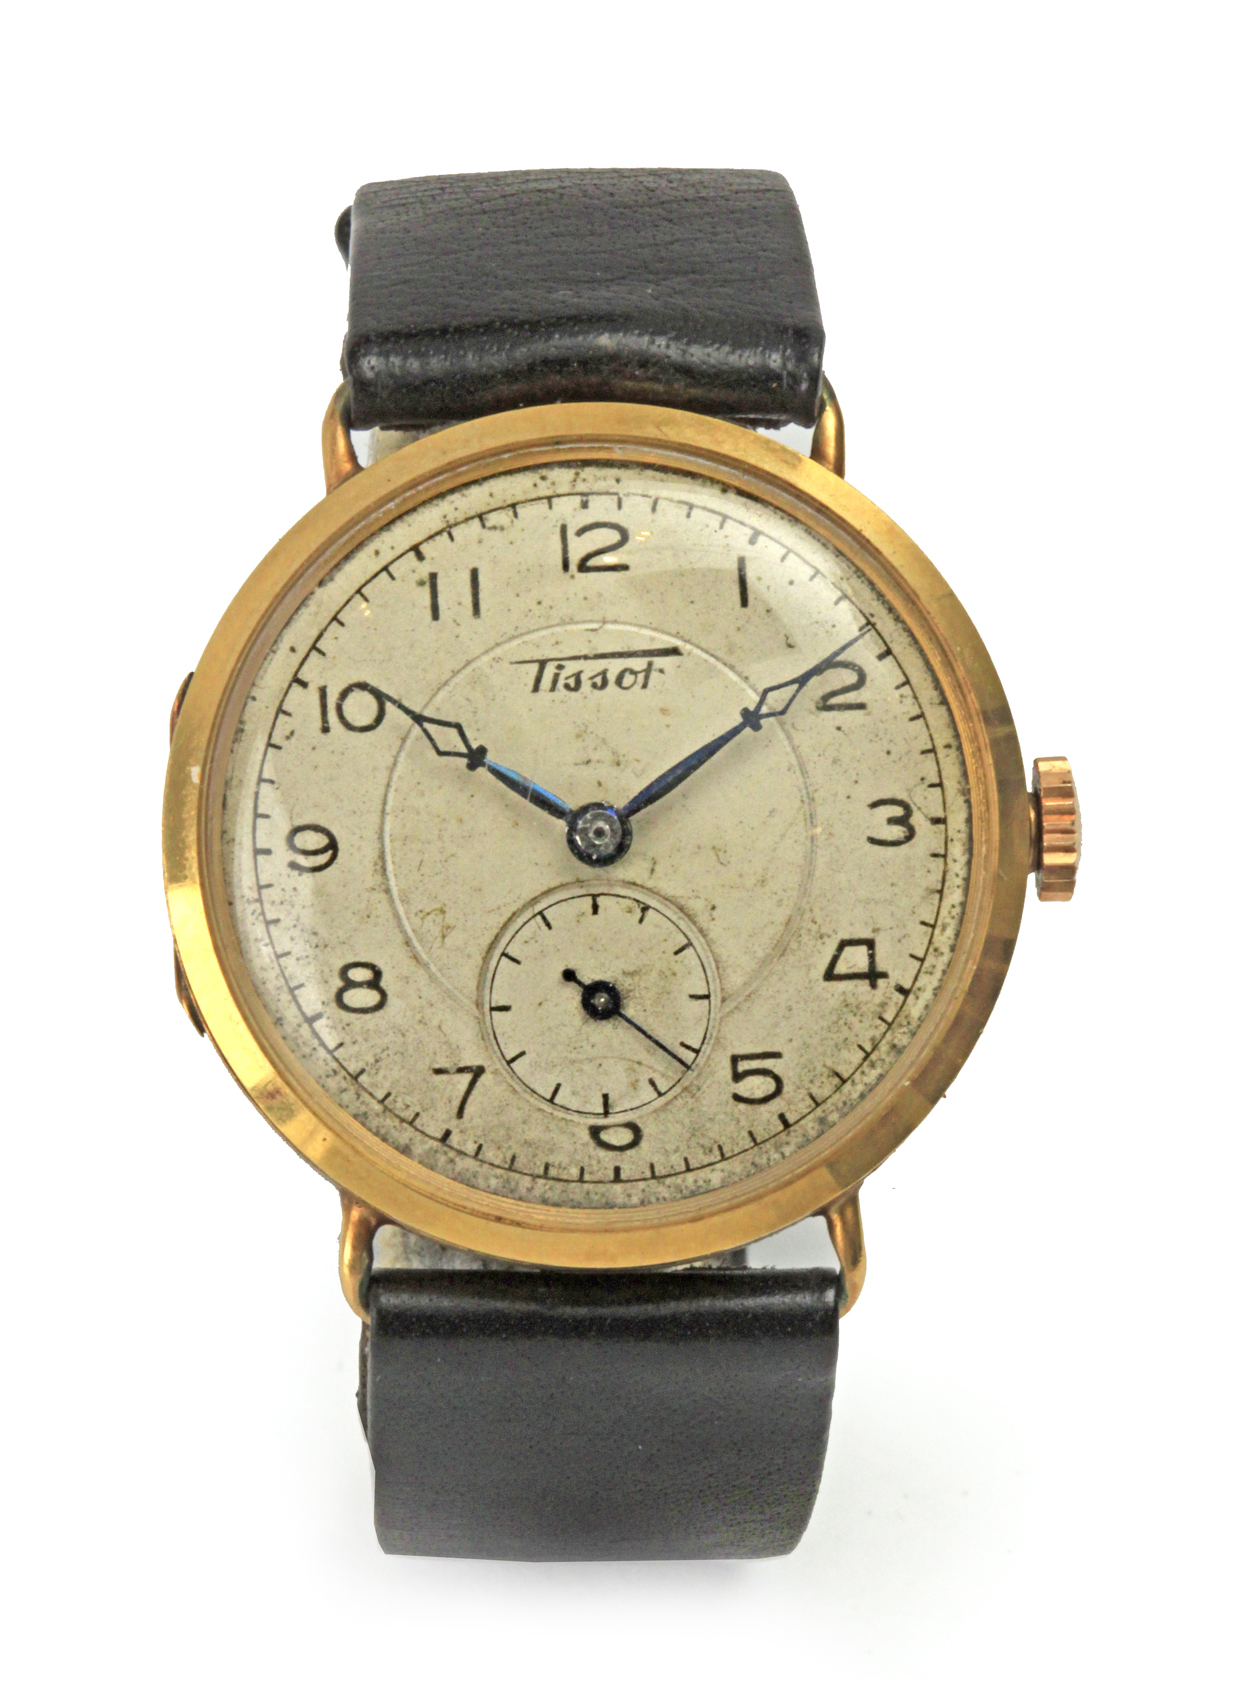 Tissot. A wrist watch circa 1950 in 18 k. yellow gold